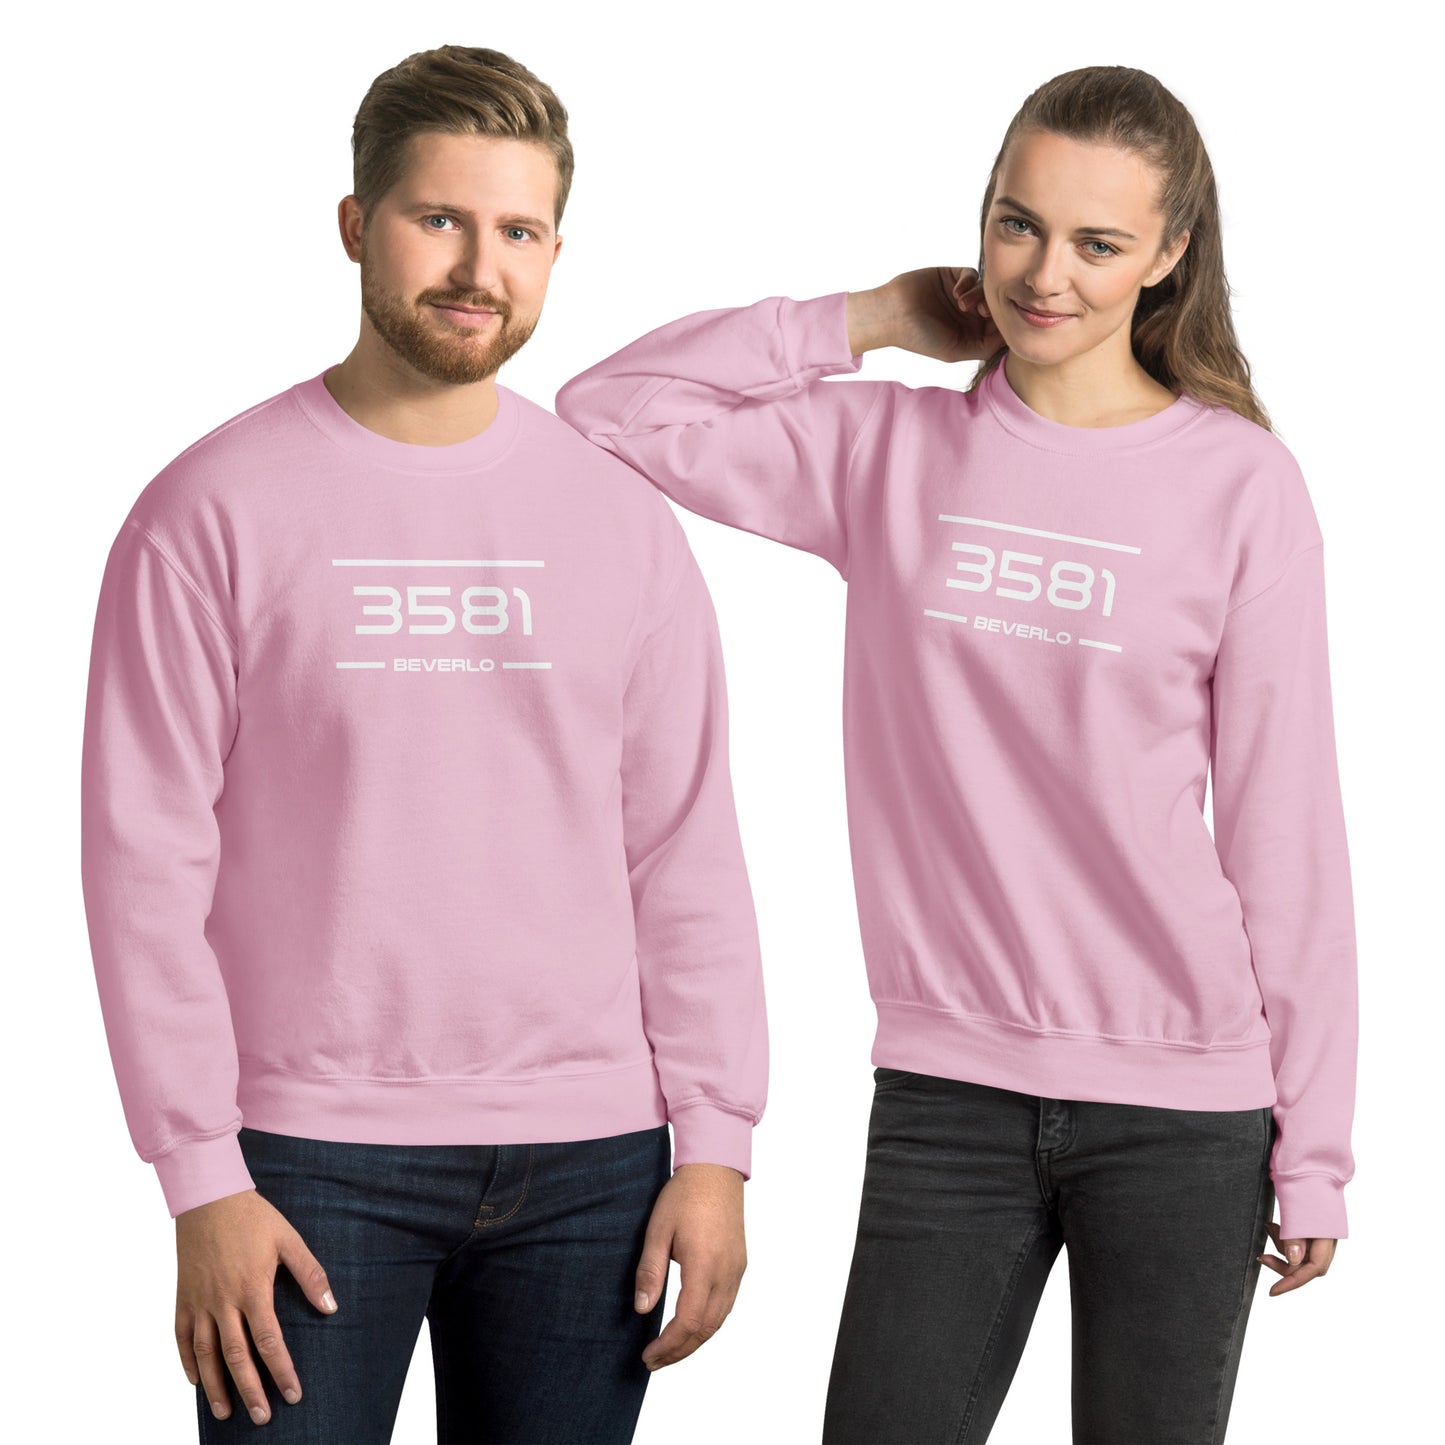 Sweater - 3581 - Beverlo (M/V)